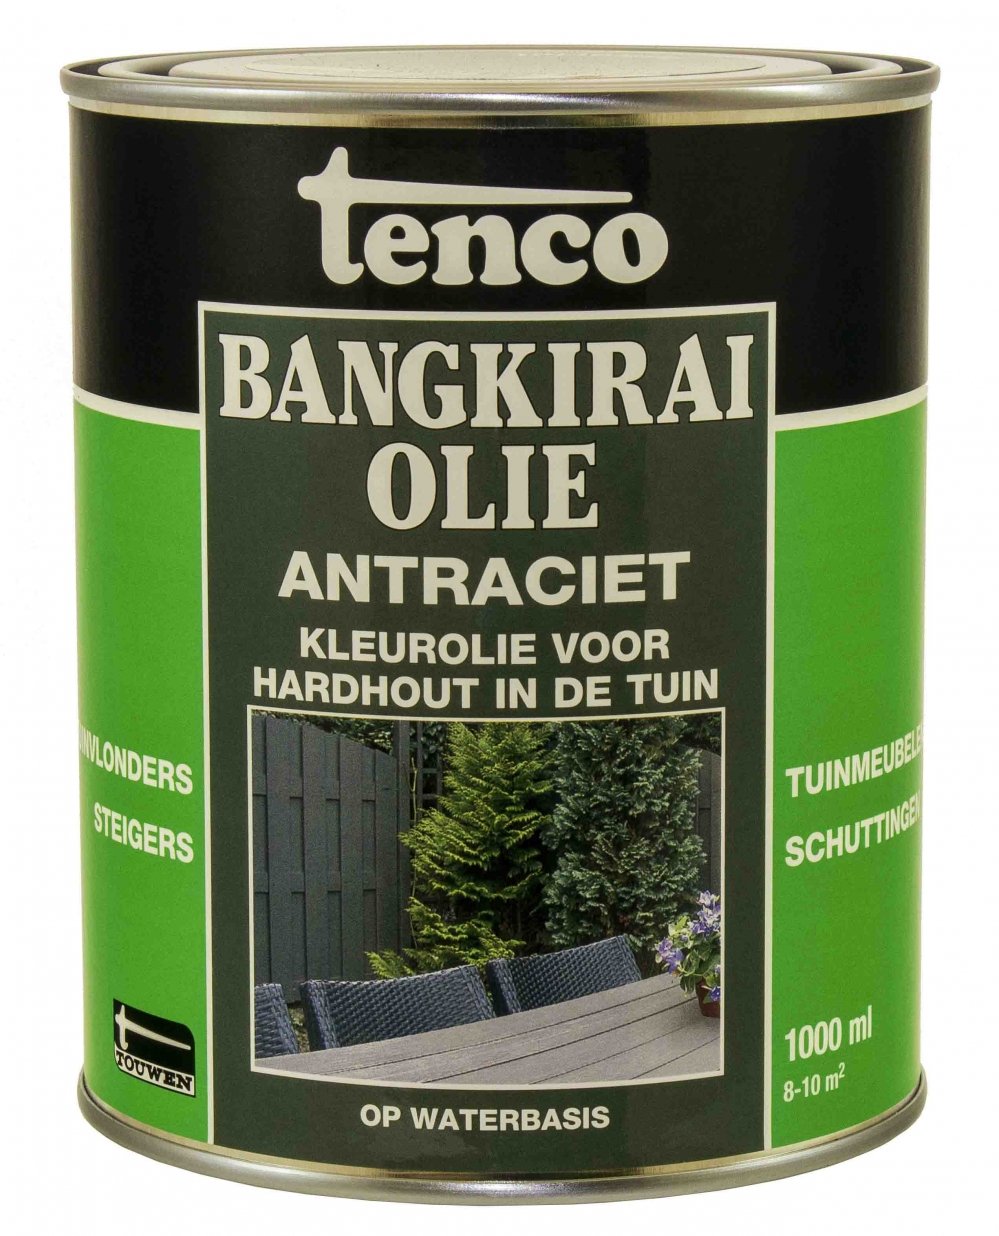 Bankirai olie - Tenco-bangkiraiolie-antraciet-1ltr-verfcompleet.nl